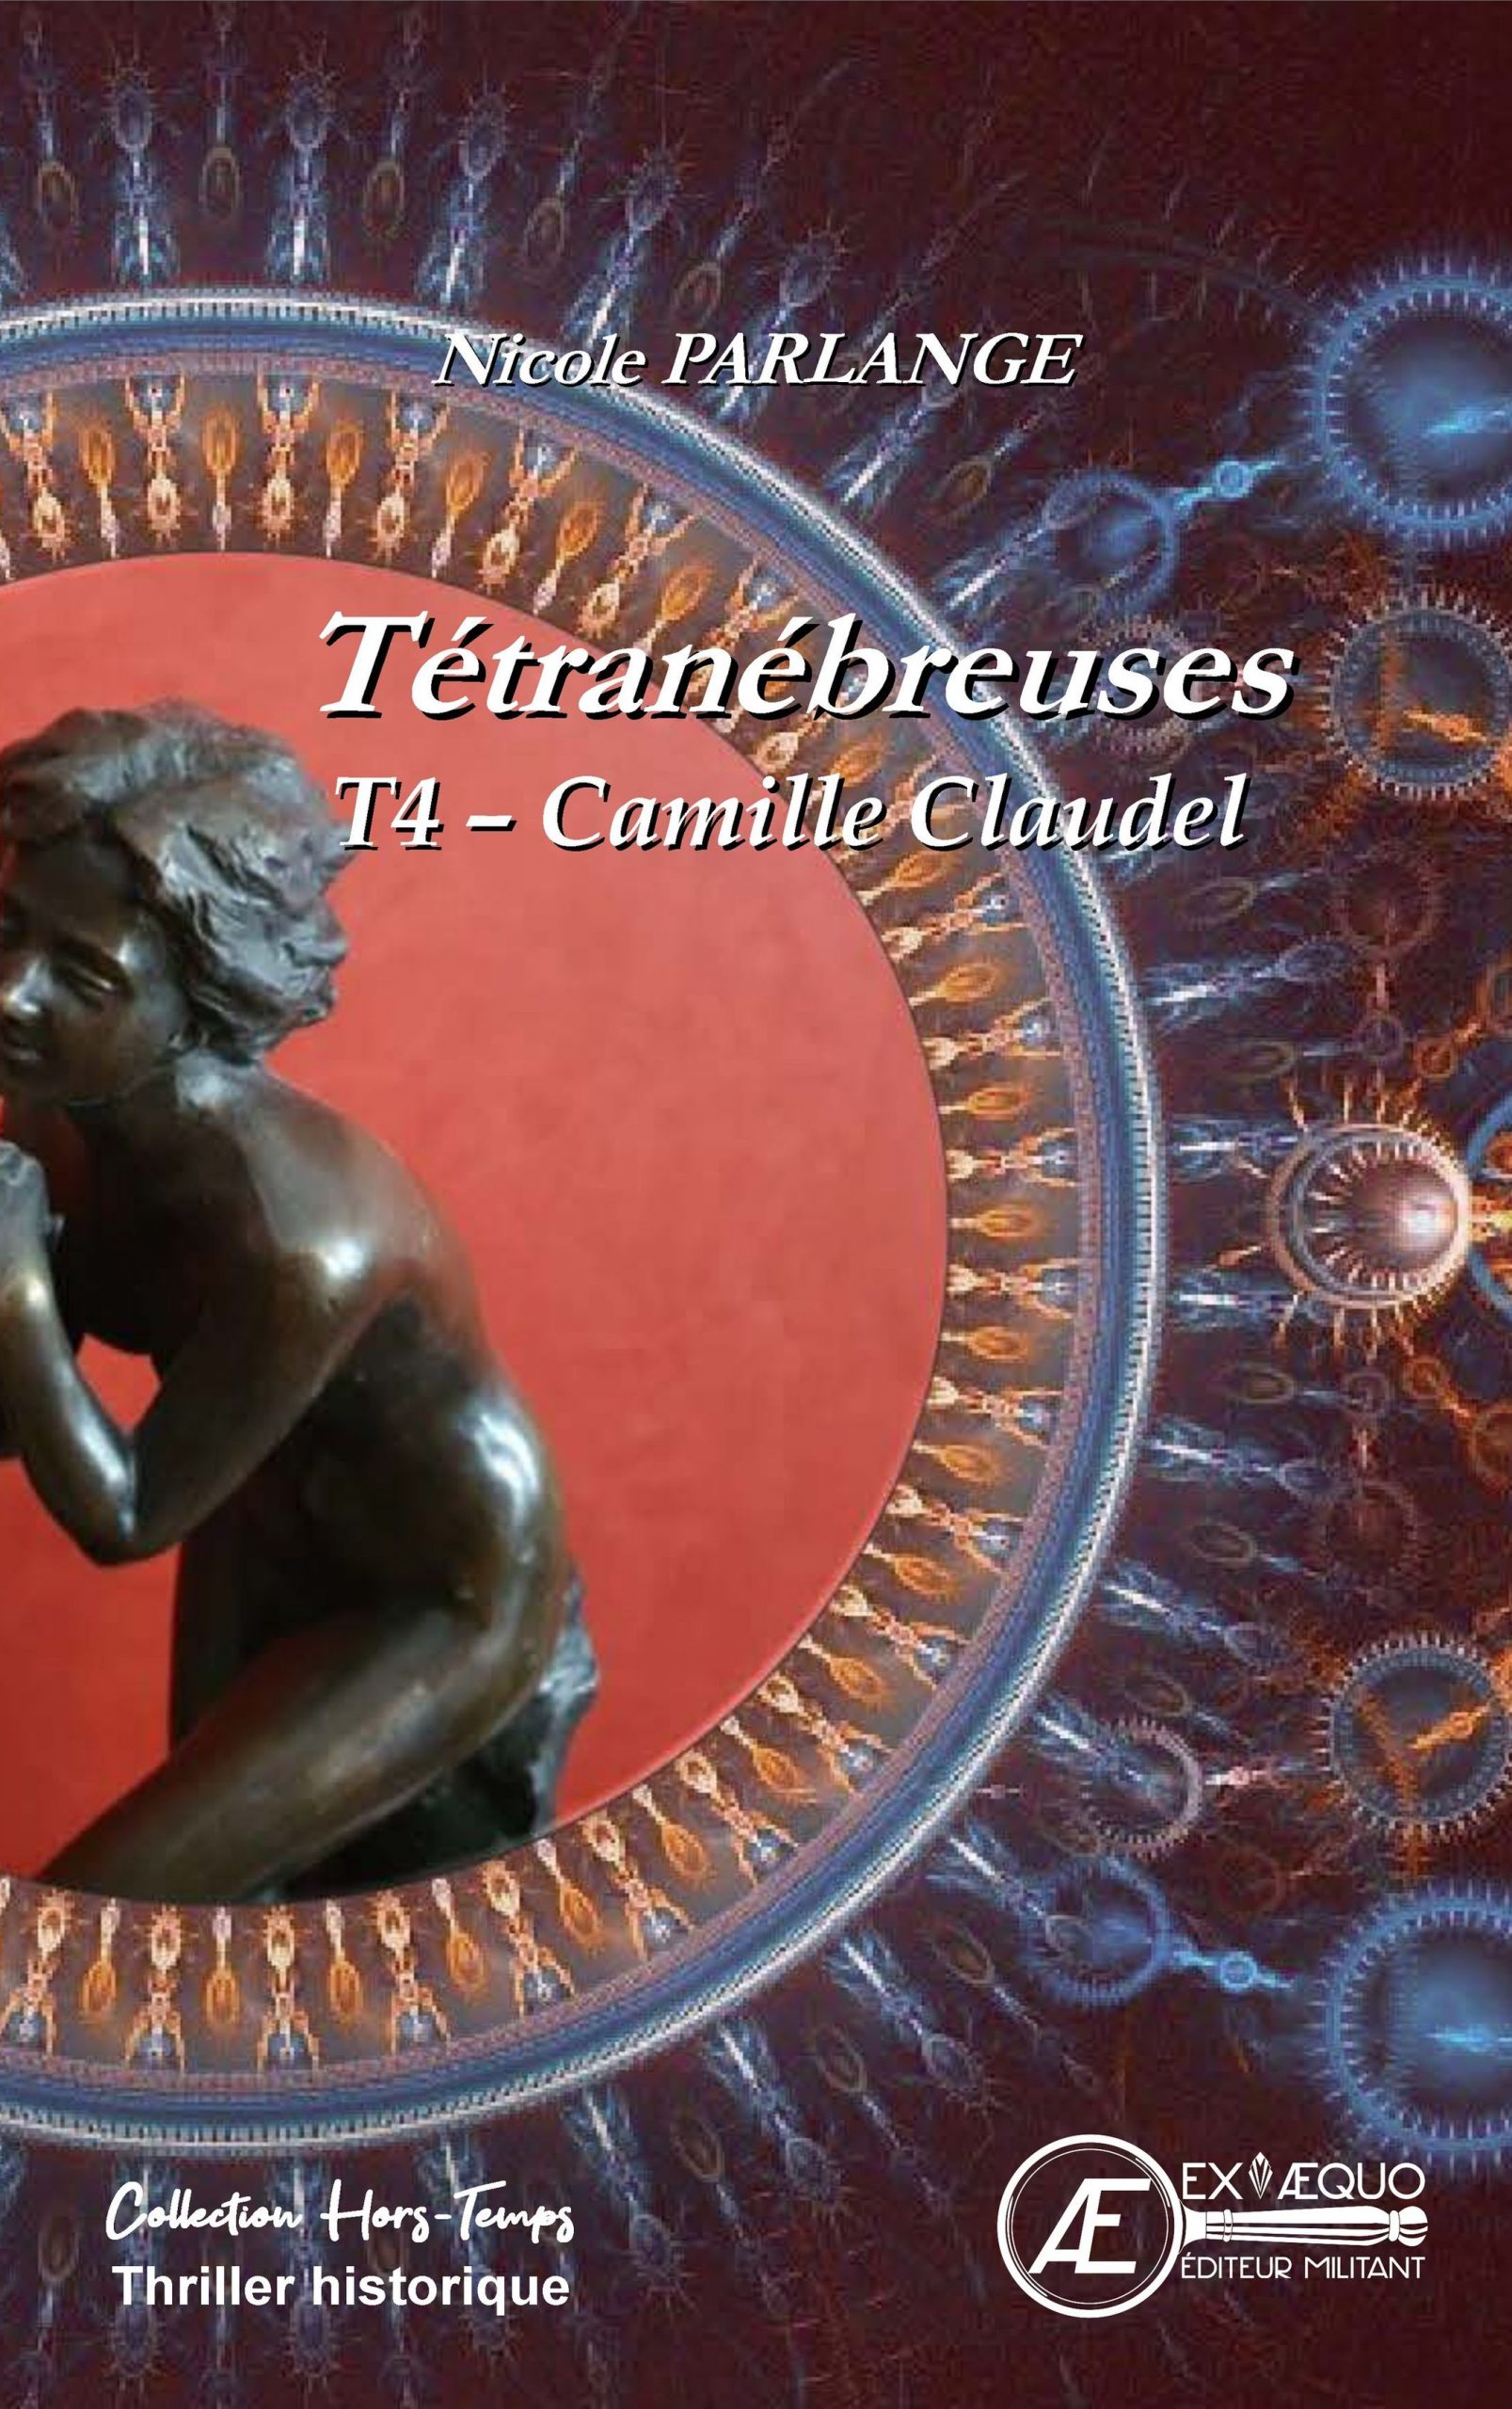 You are currently viewing Tétranébreuses T4 – Camille Claudel, de Nicole Parlange